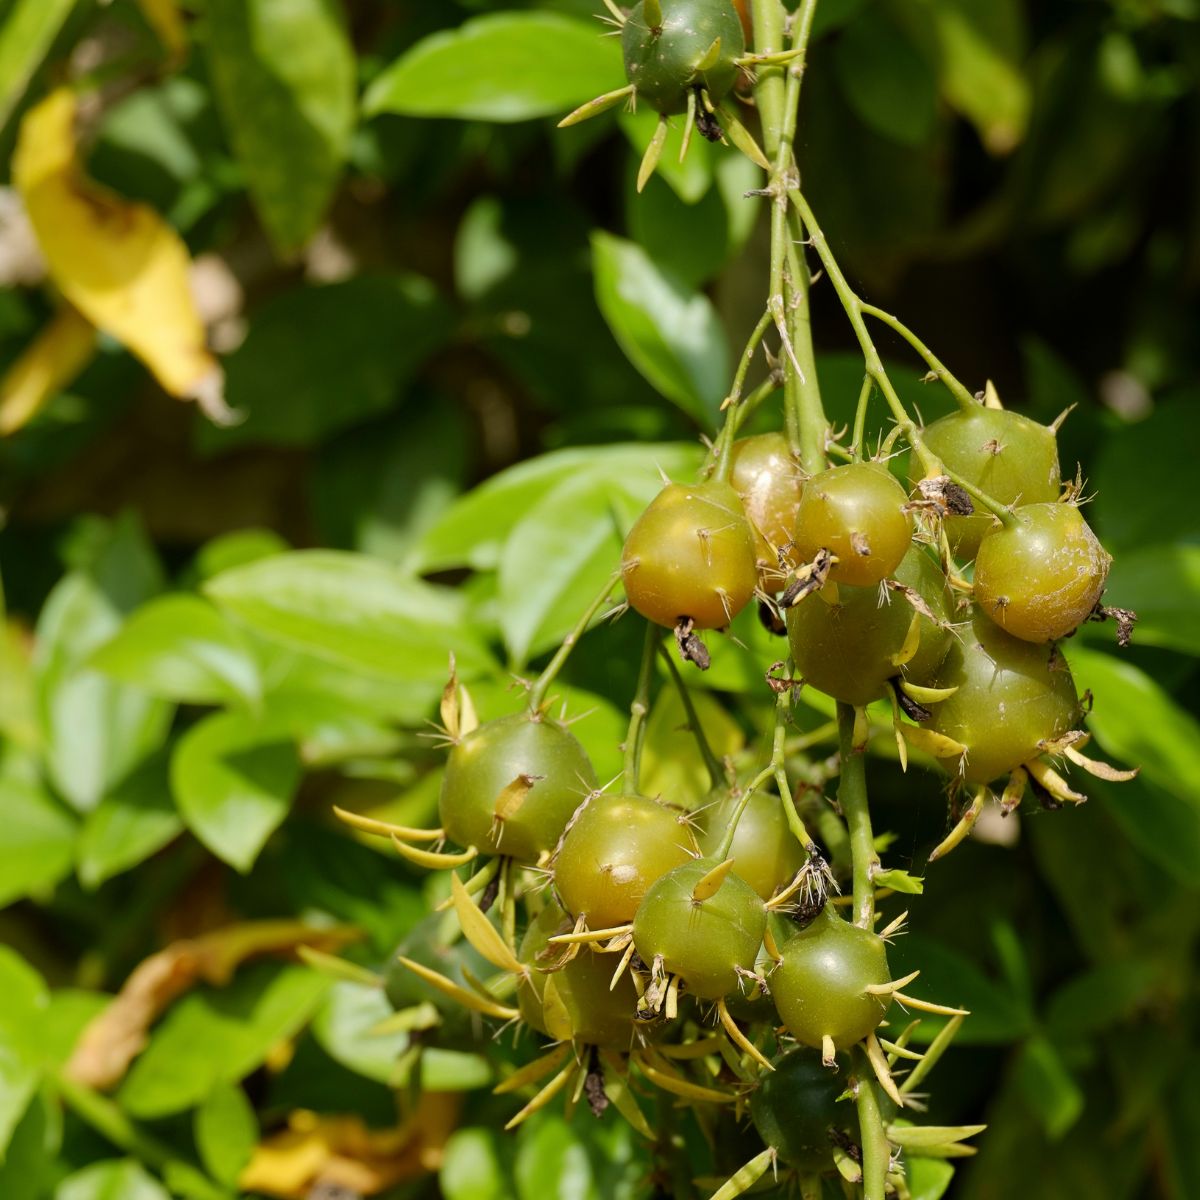 Pereskia aculeata - poky green berries